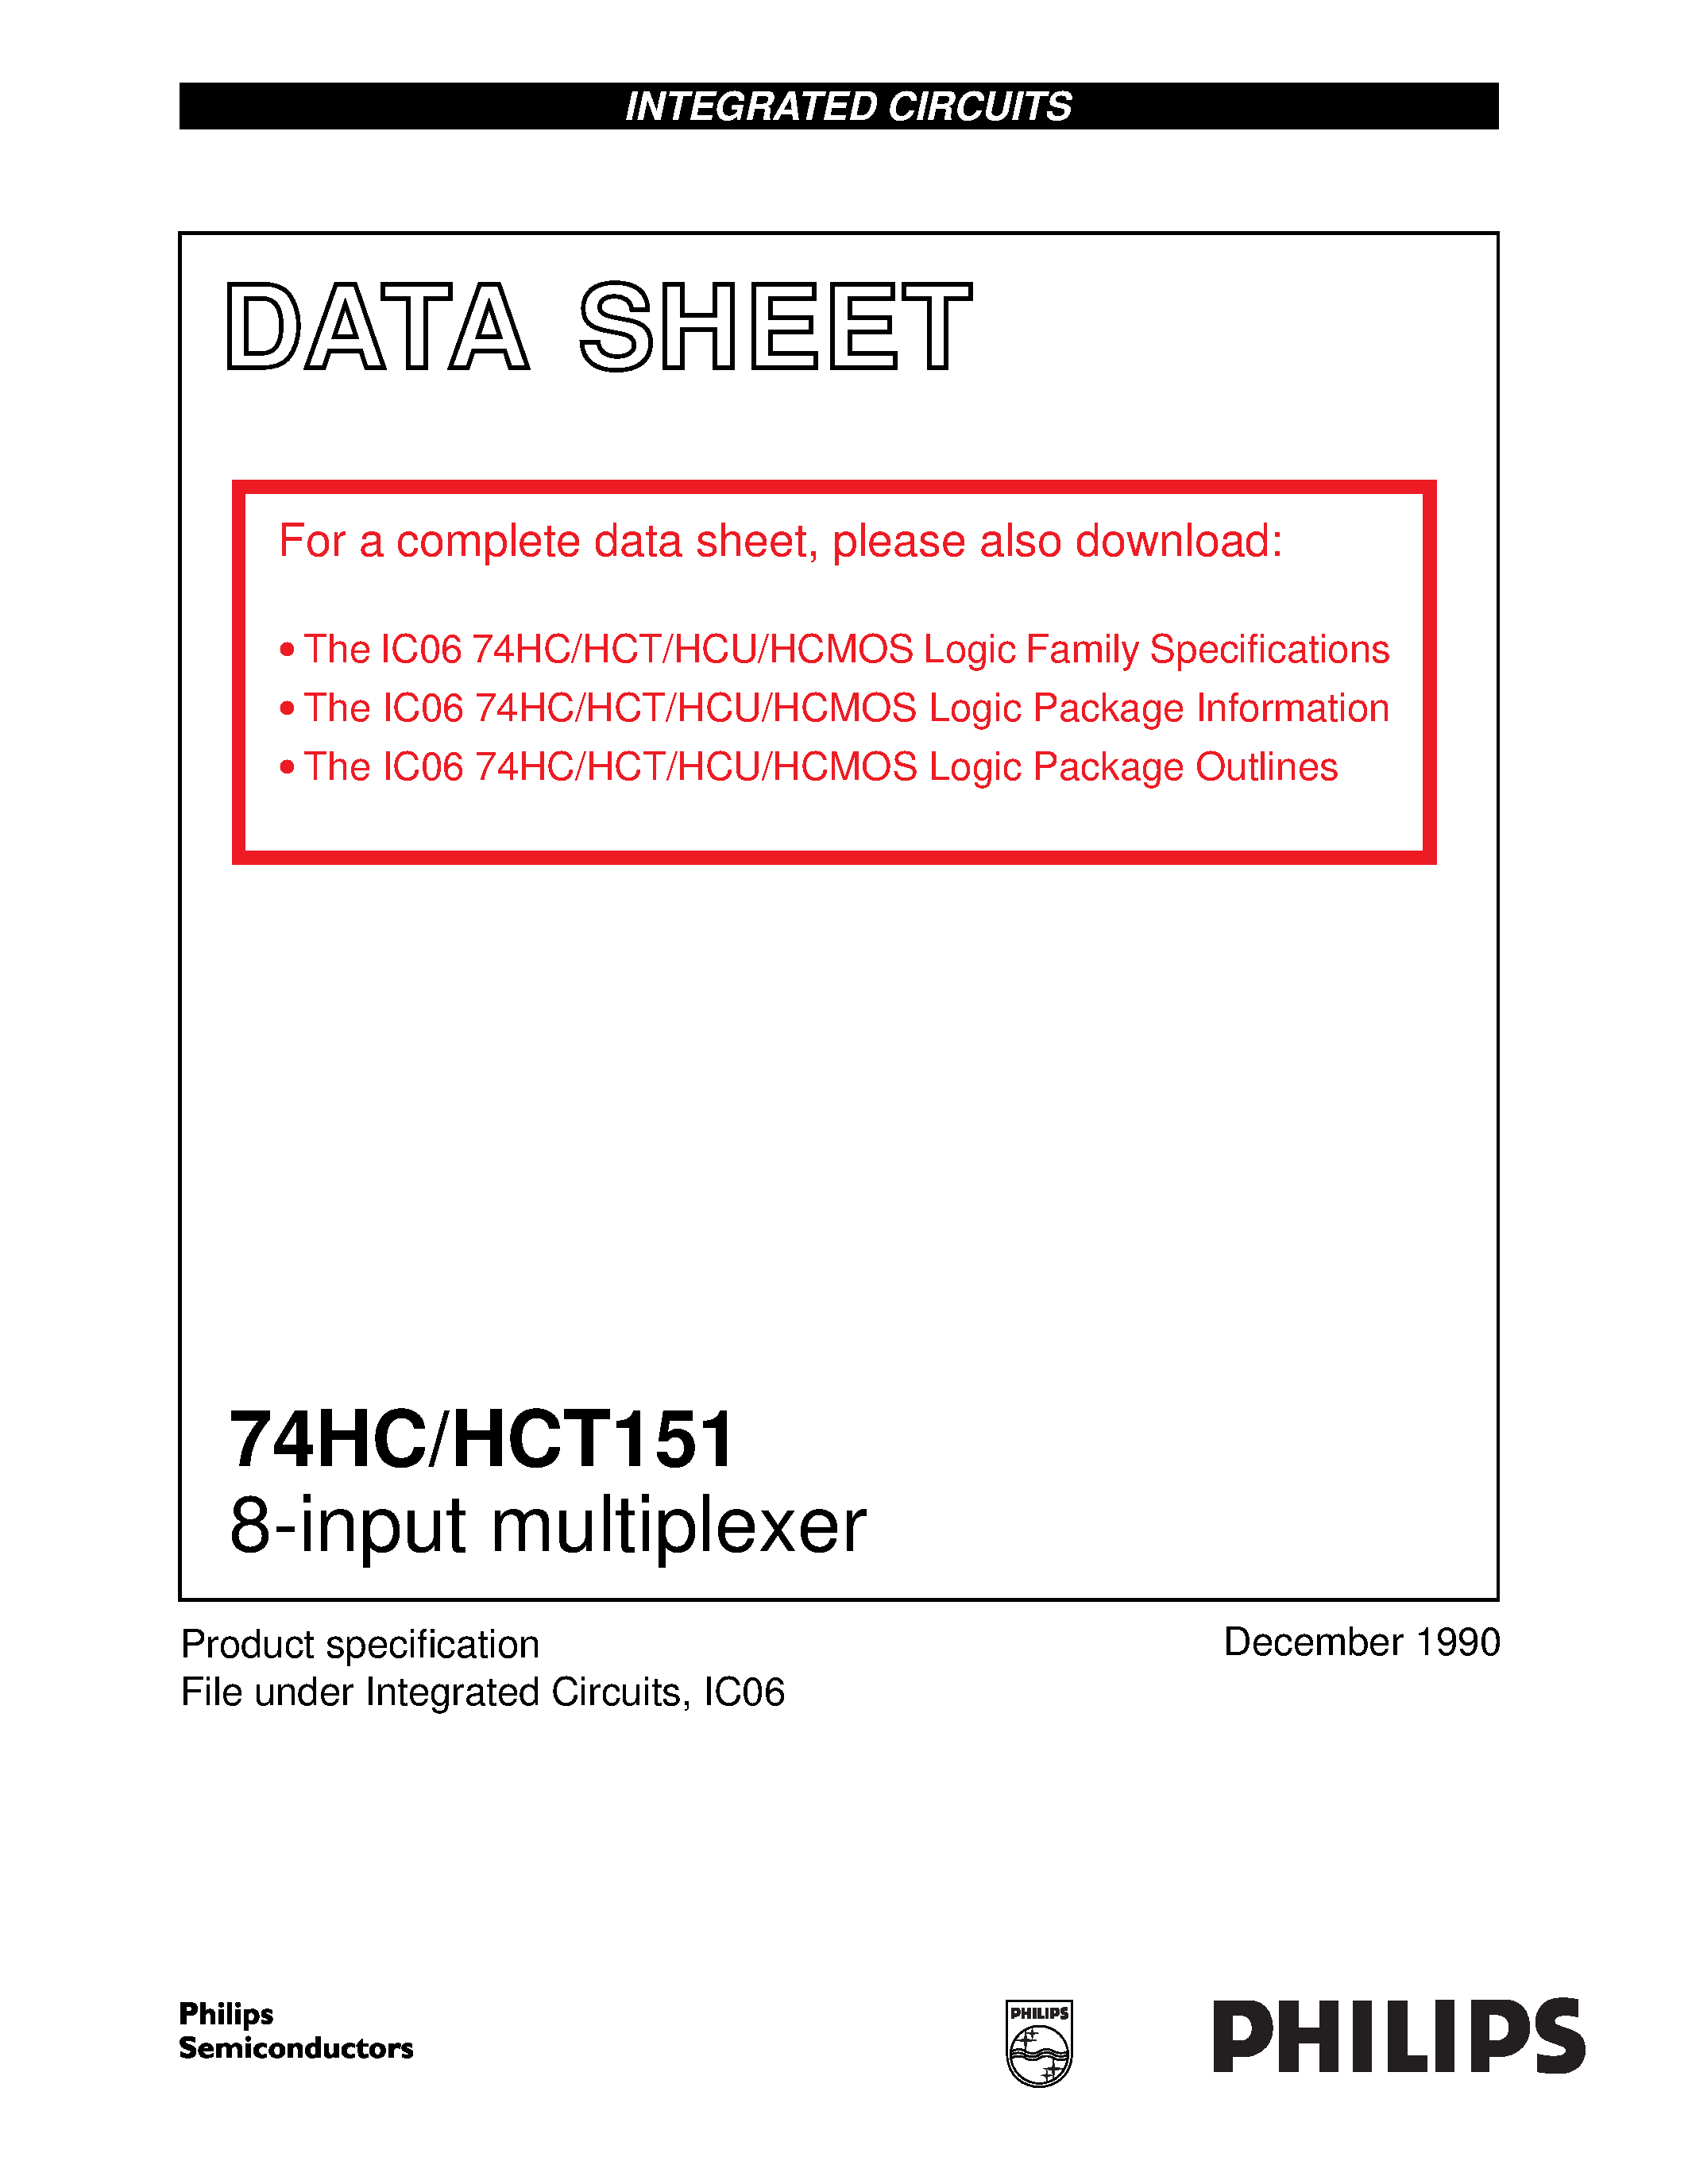 Datasheet 74HCT151 - 8-input multiplexer page 1